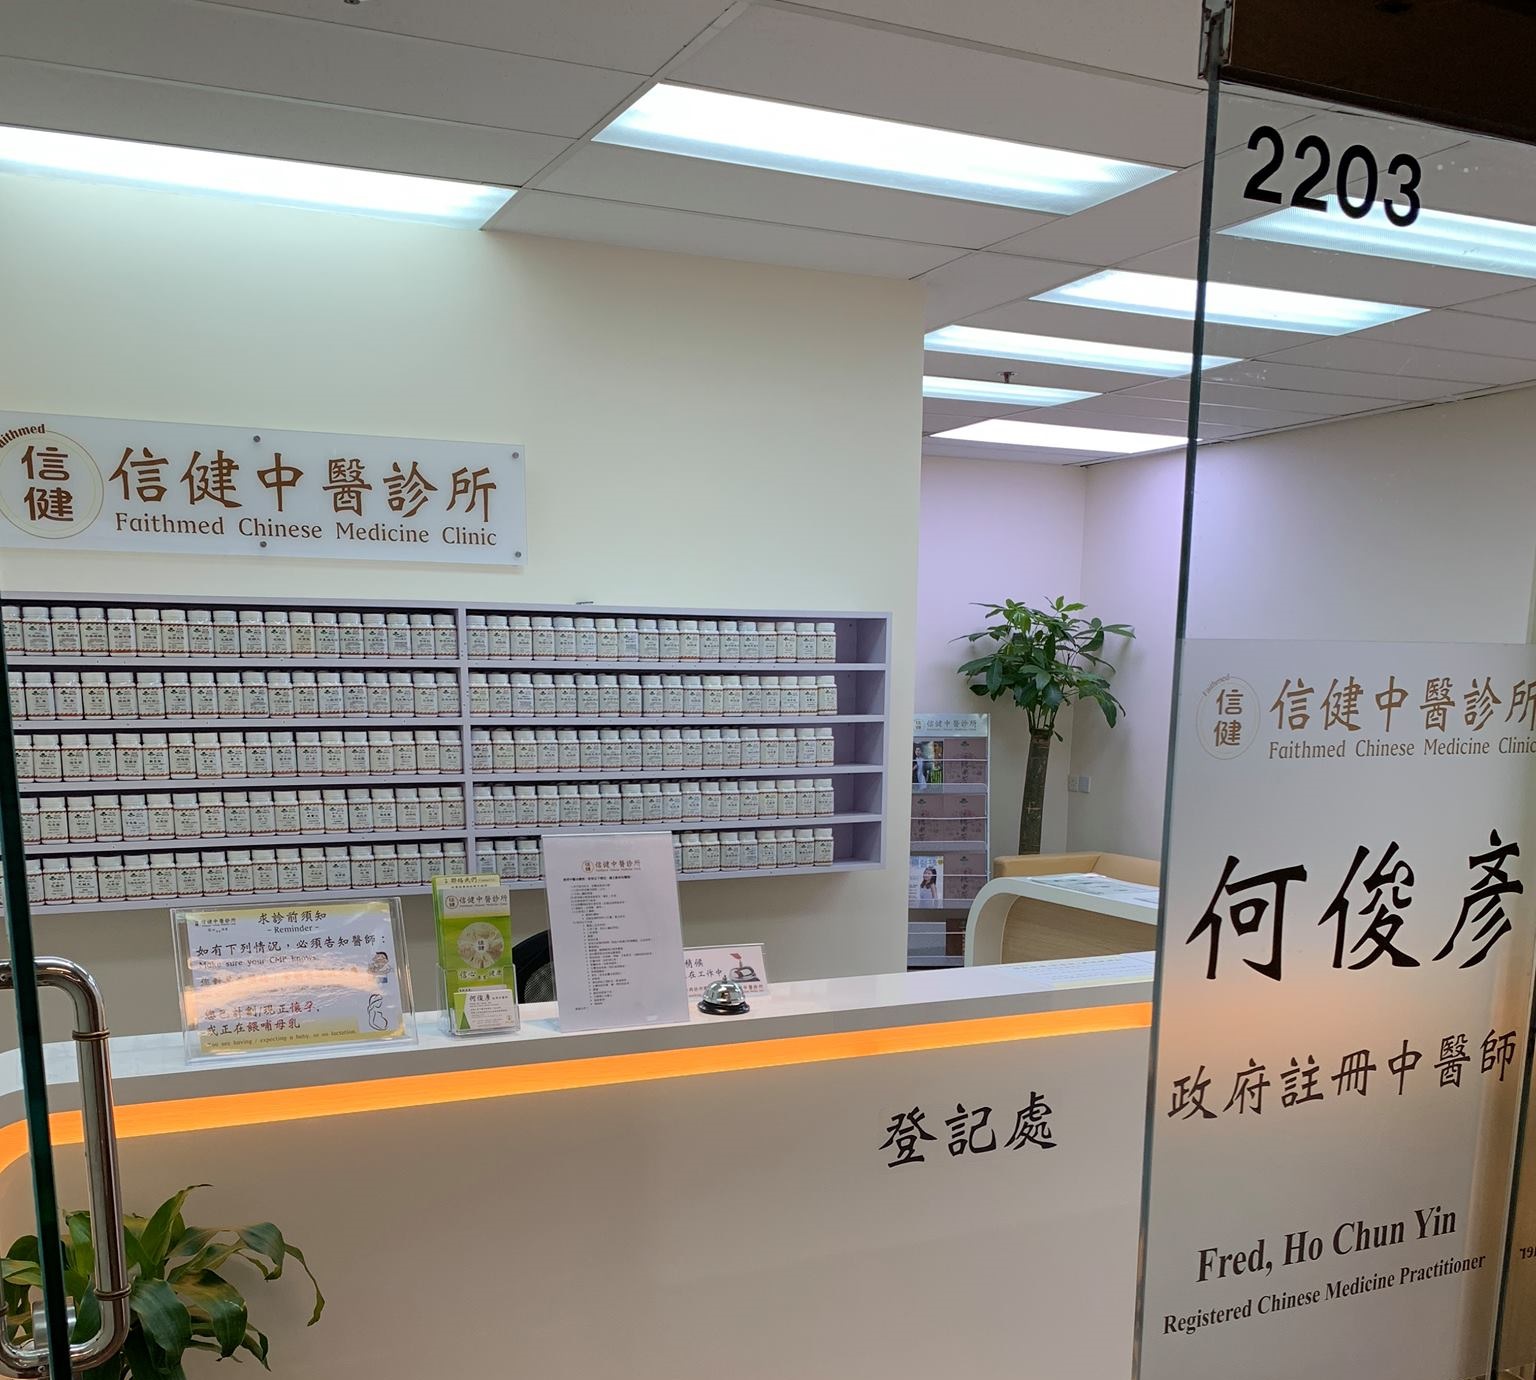 Traditional Chinese Medicine Clinic: 信健中醫診所